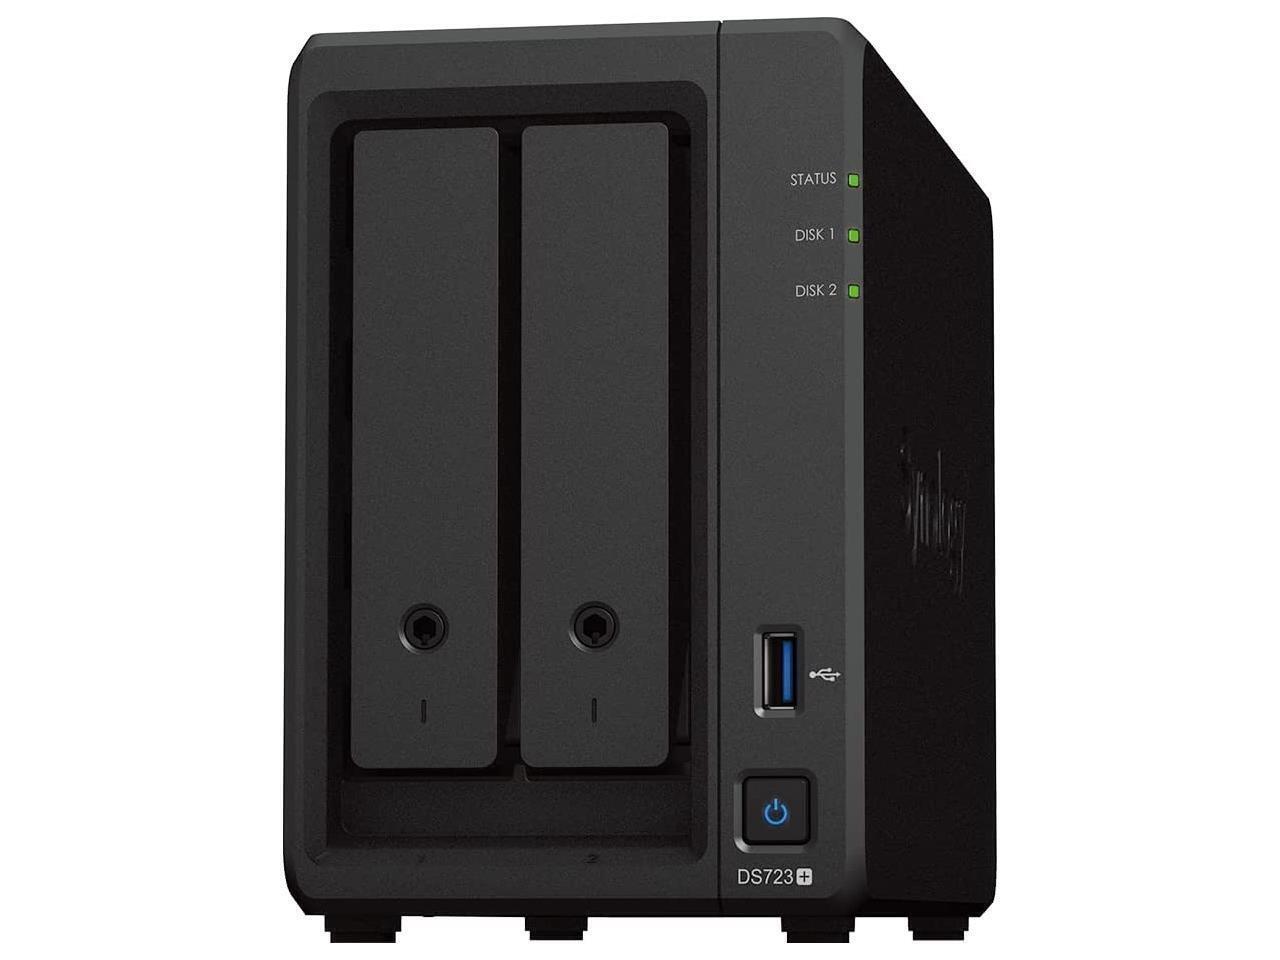 Synology DiskStation DS723+ (2Bay/AMD/2GB) NAS Network Storage Server